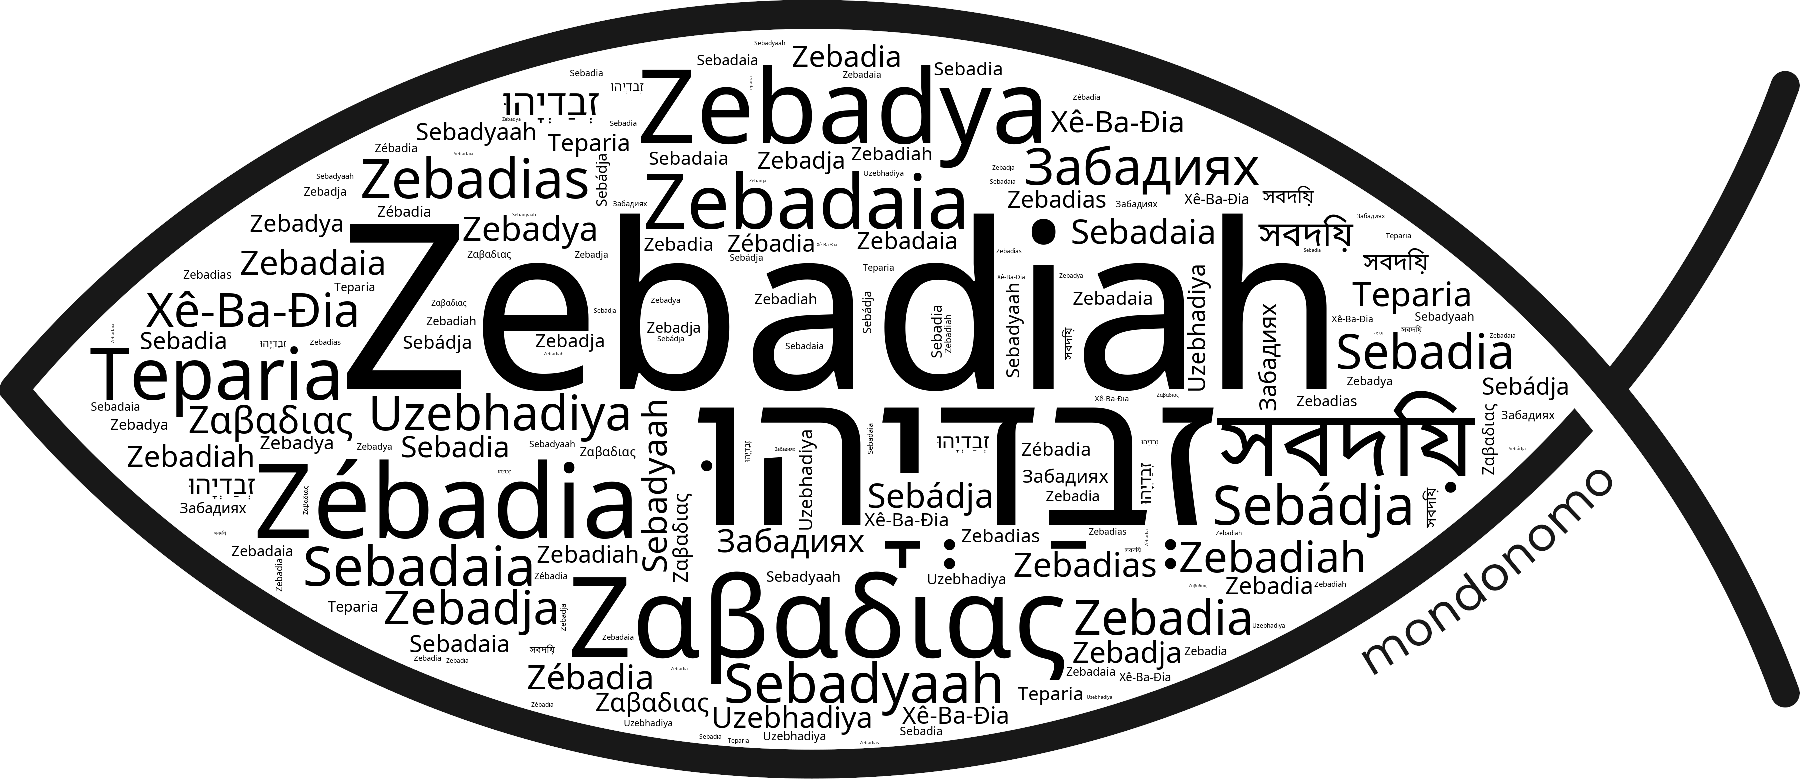 Name Zebadiah in the world's Bibles